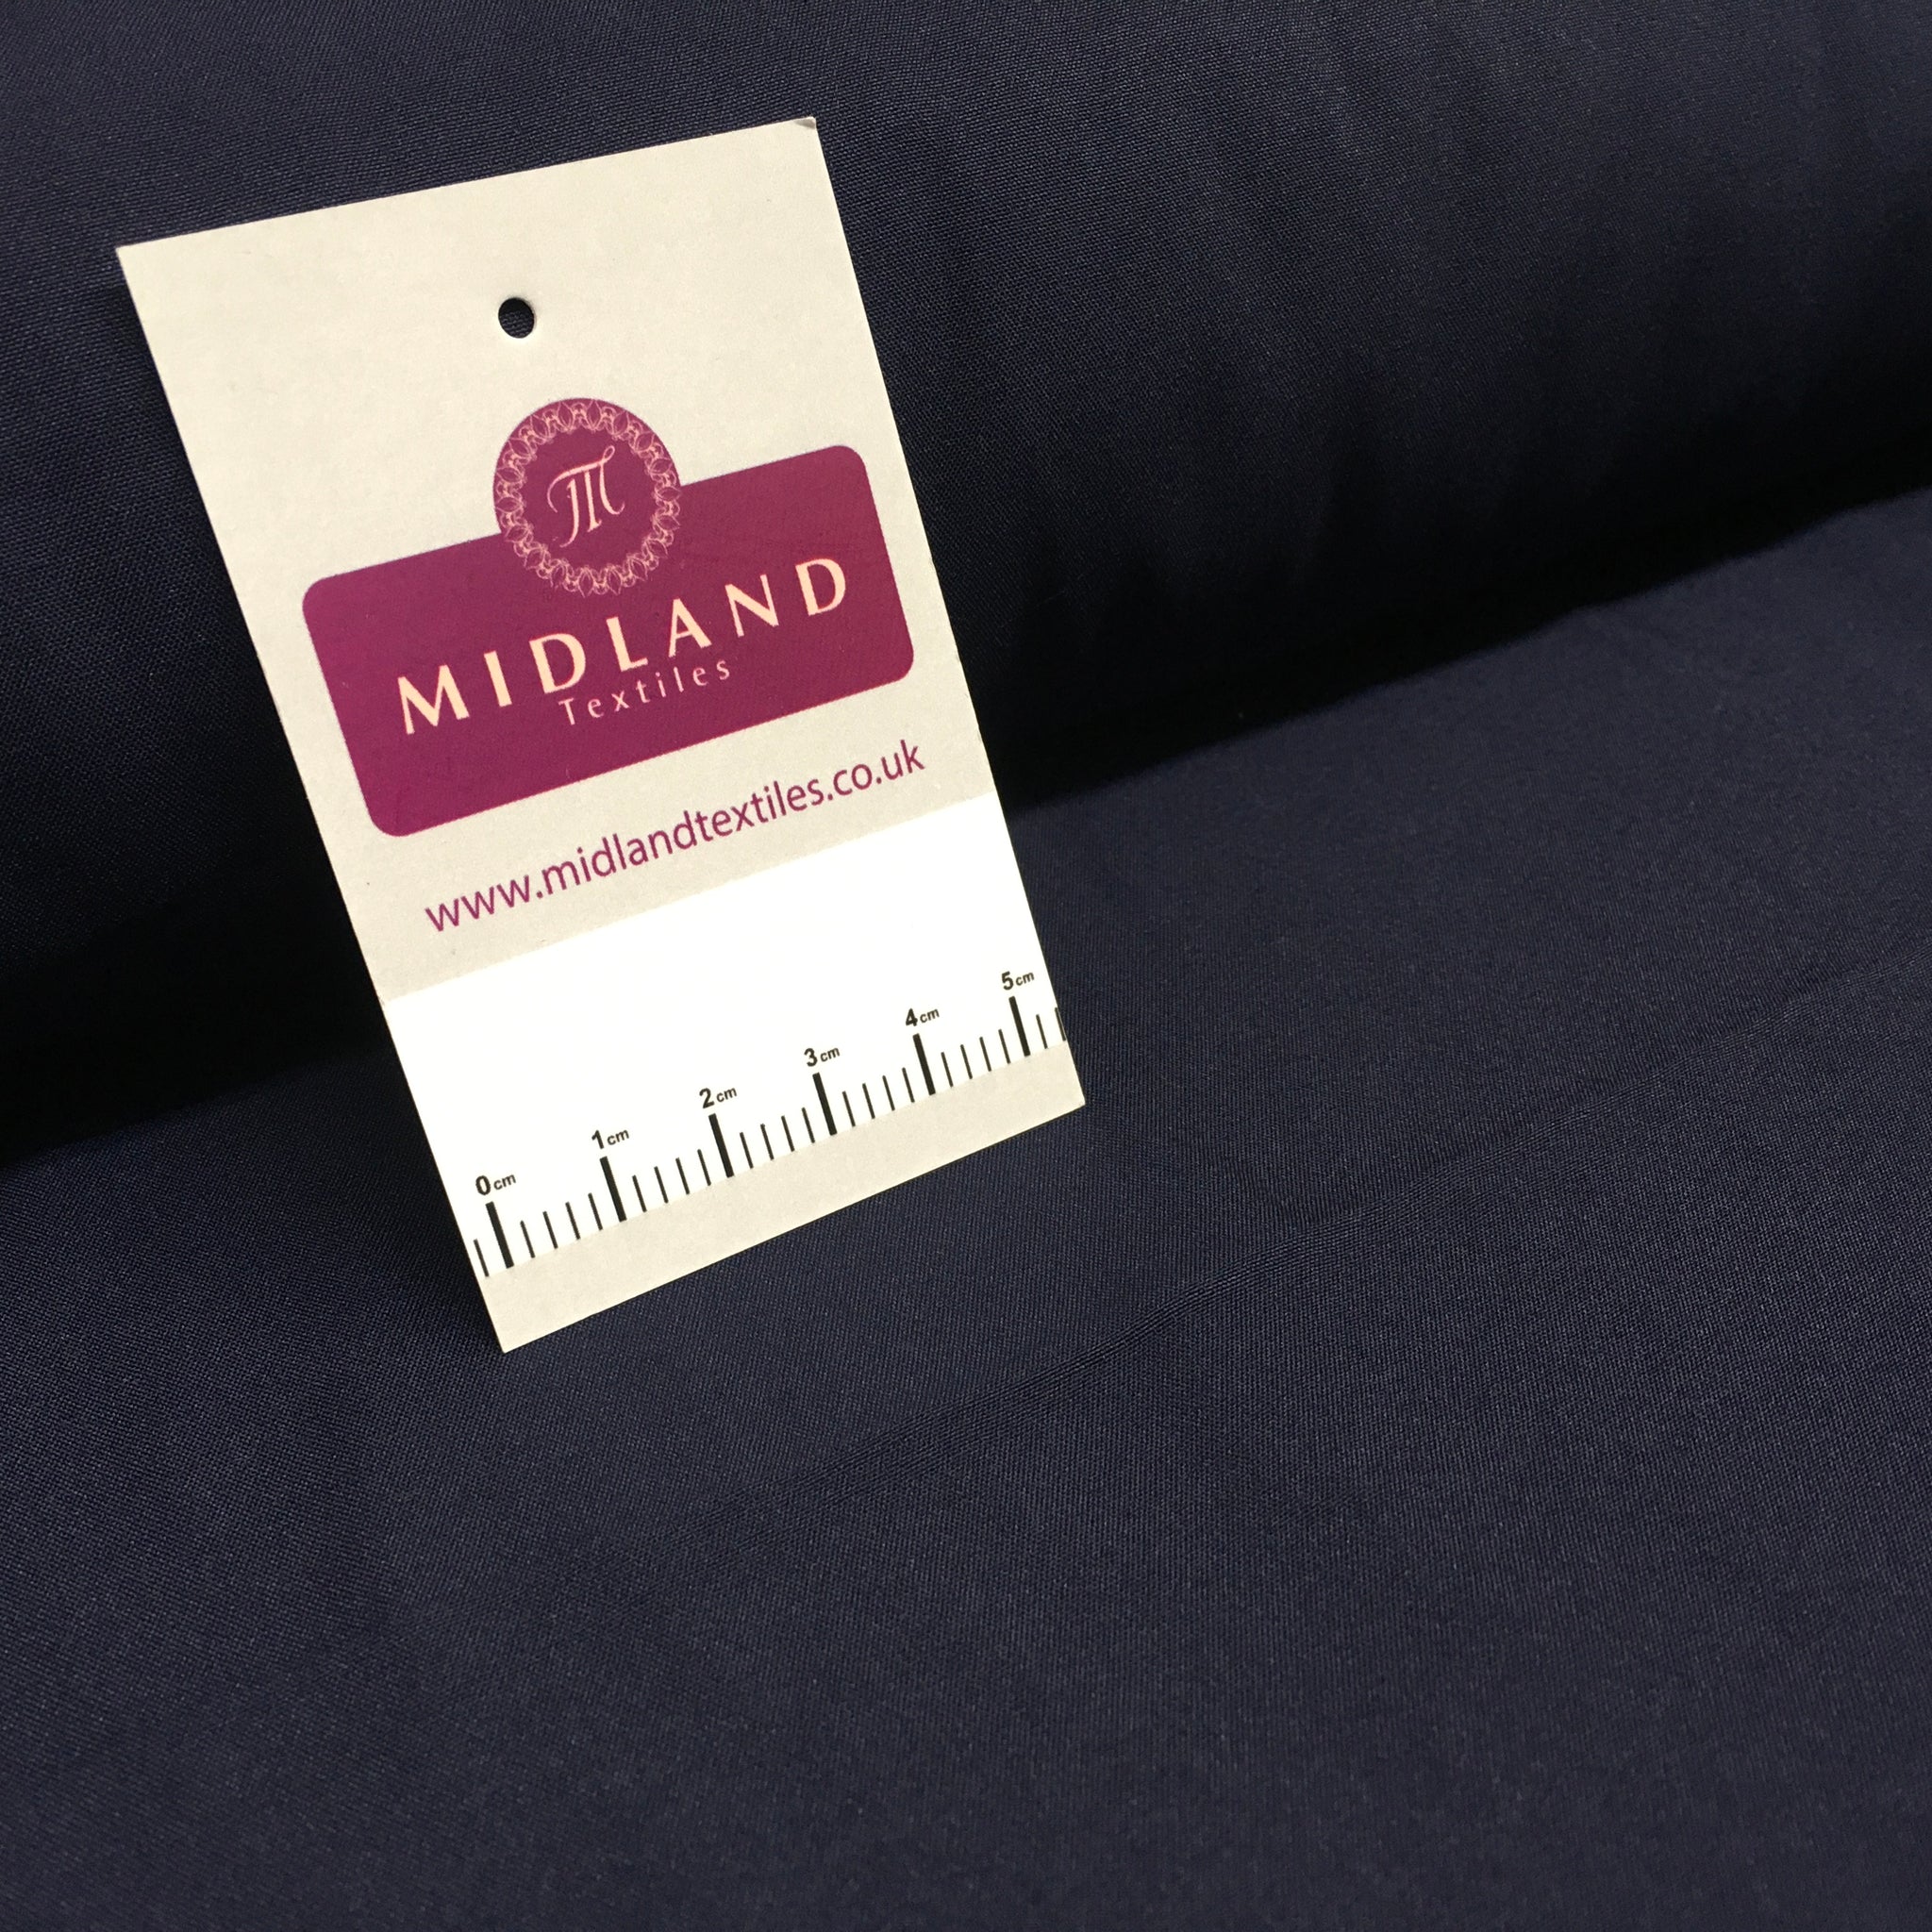 Plain Soft Lightweight Lining 100% Polyester Fabric 100 cm Wide MR860 Mtex